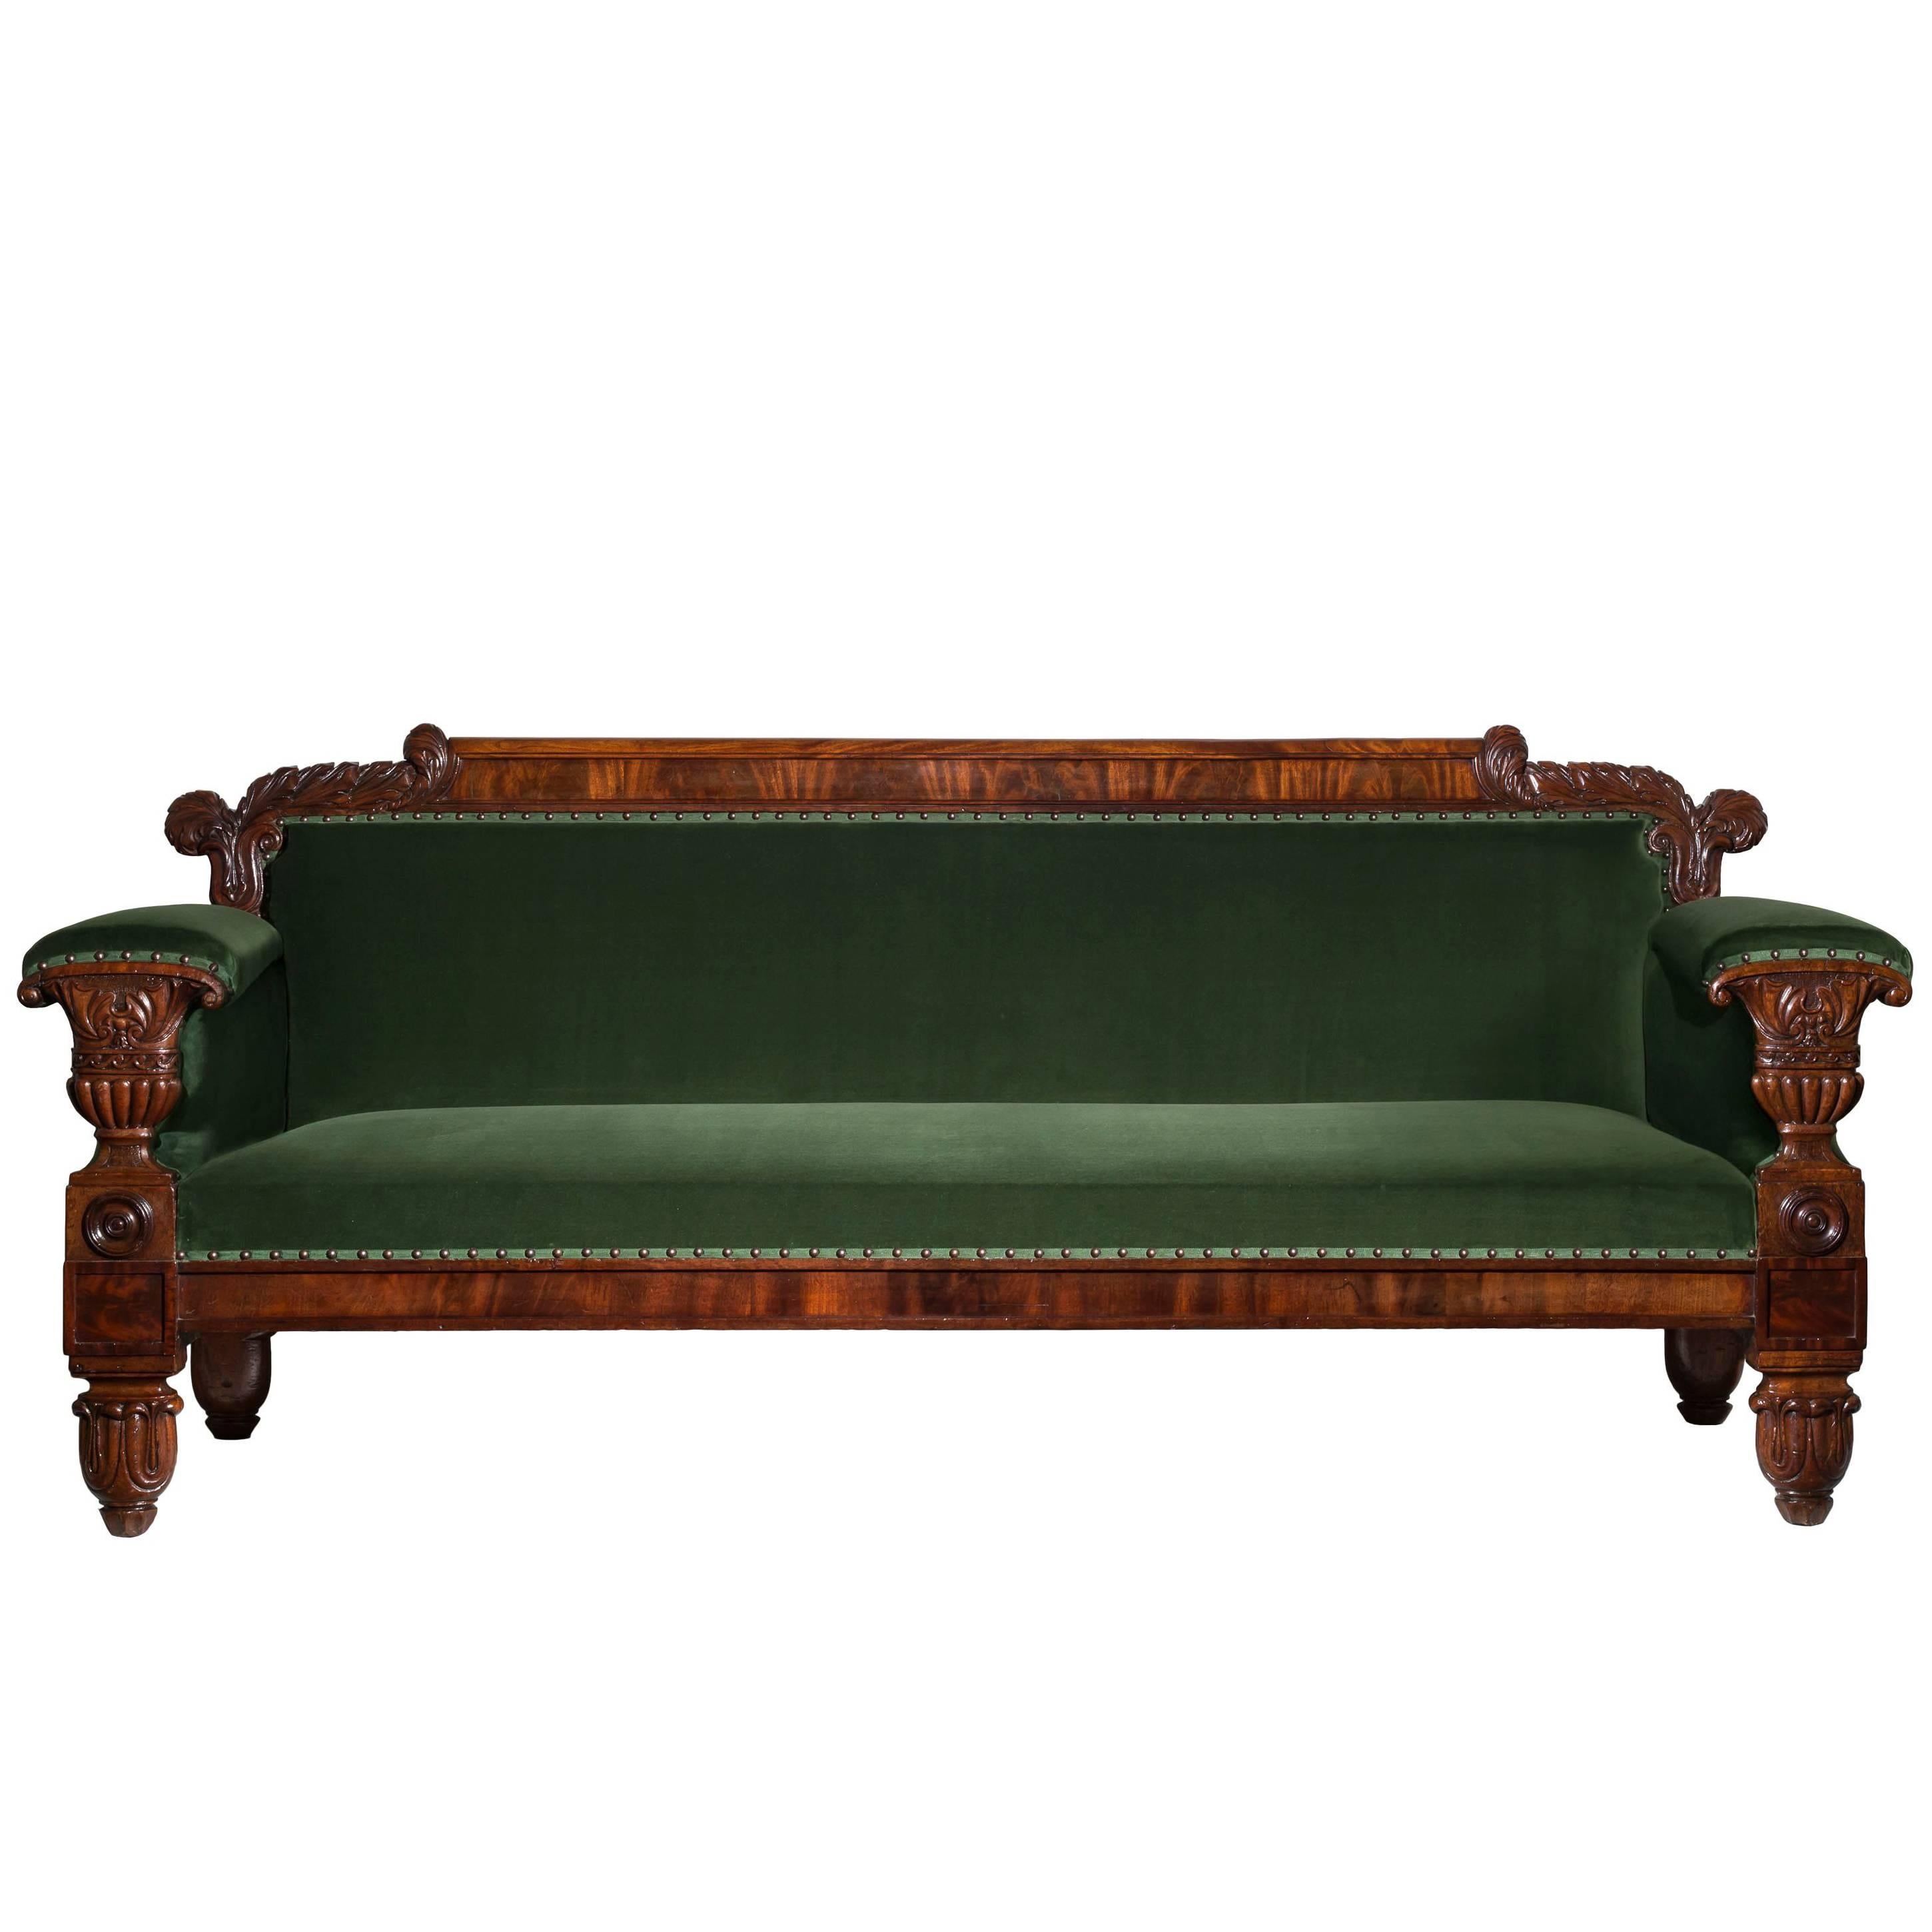 English 19th Century Regency Mahogany Sofa in Green Velvet Design by John Taylor